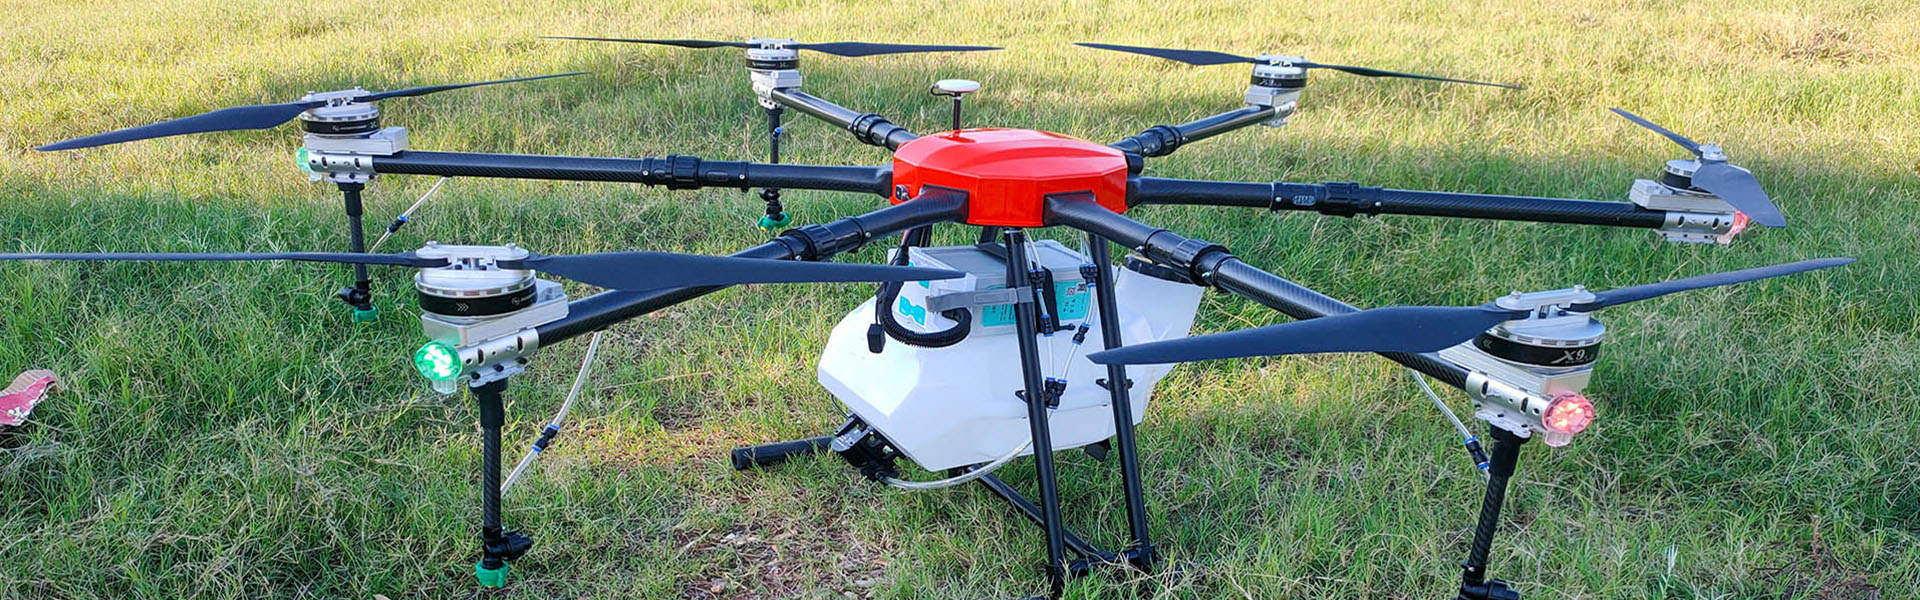 UAV การเกษตร, การป้องกันพืช UAV, อุปกรณ์เสริม UAV การเกษตร,Shenzhen fnyuav technology co.LTD